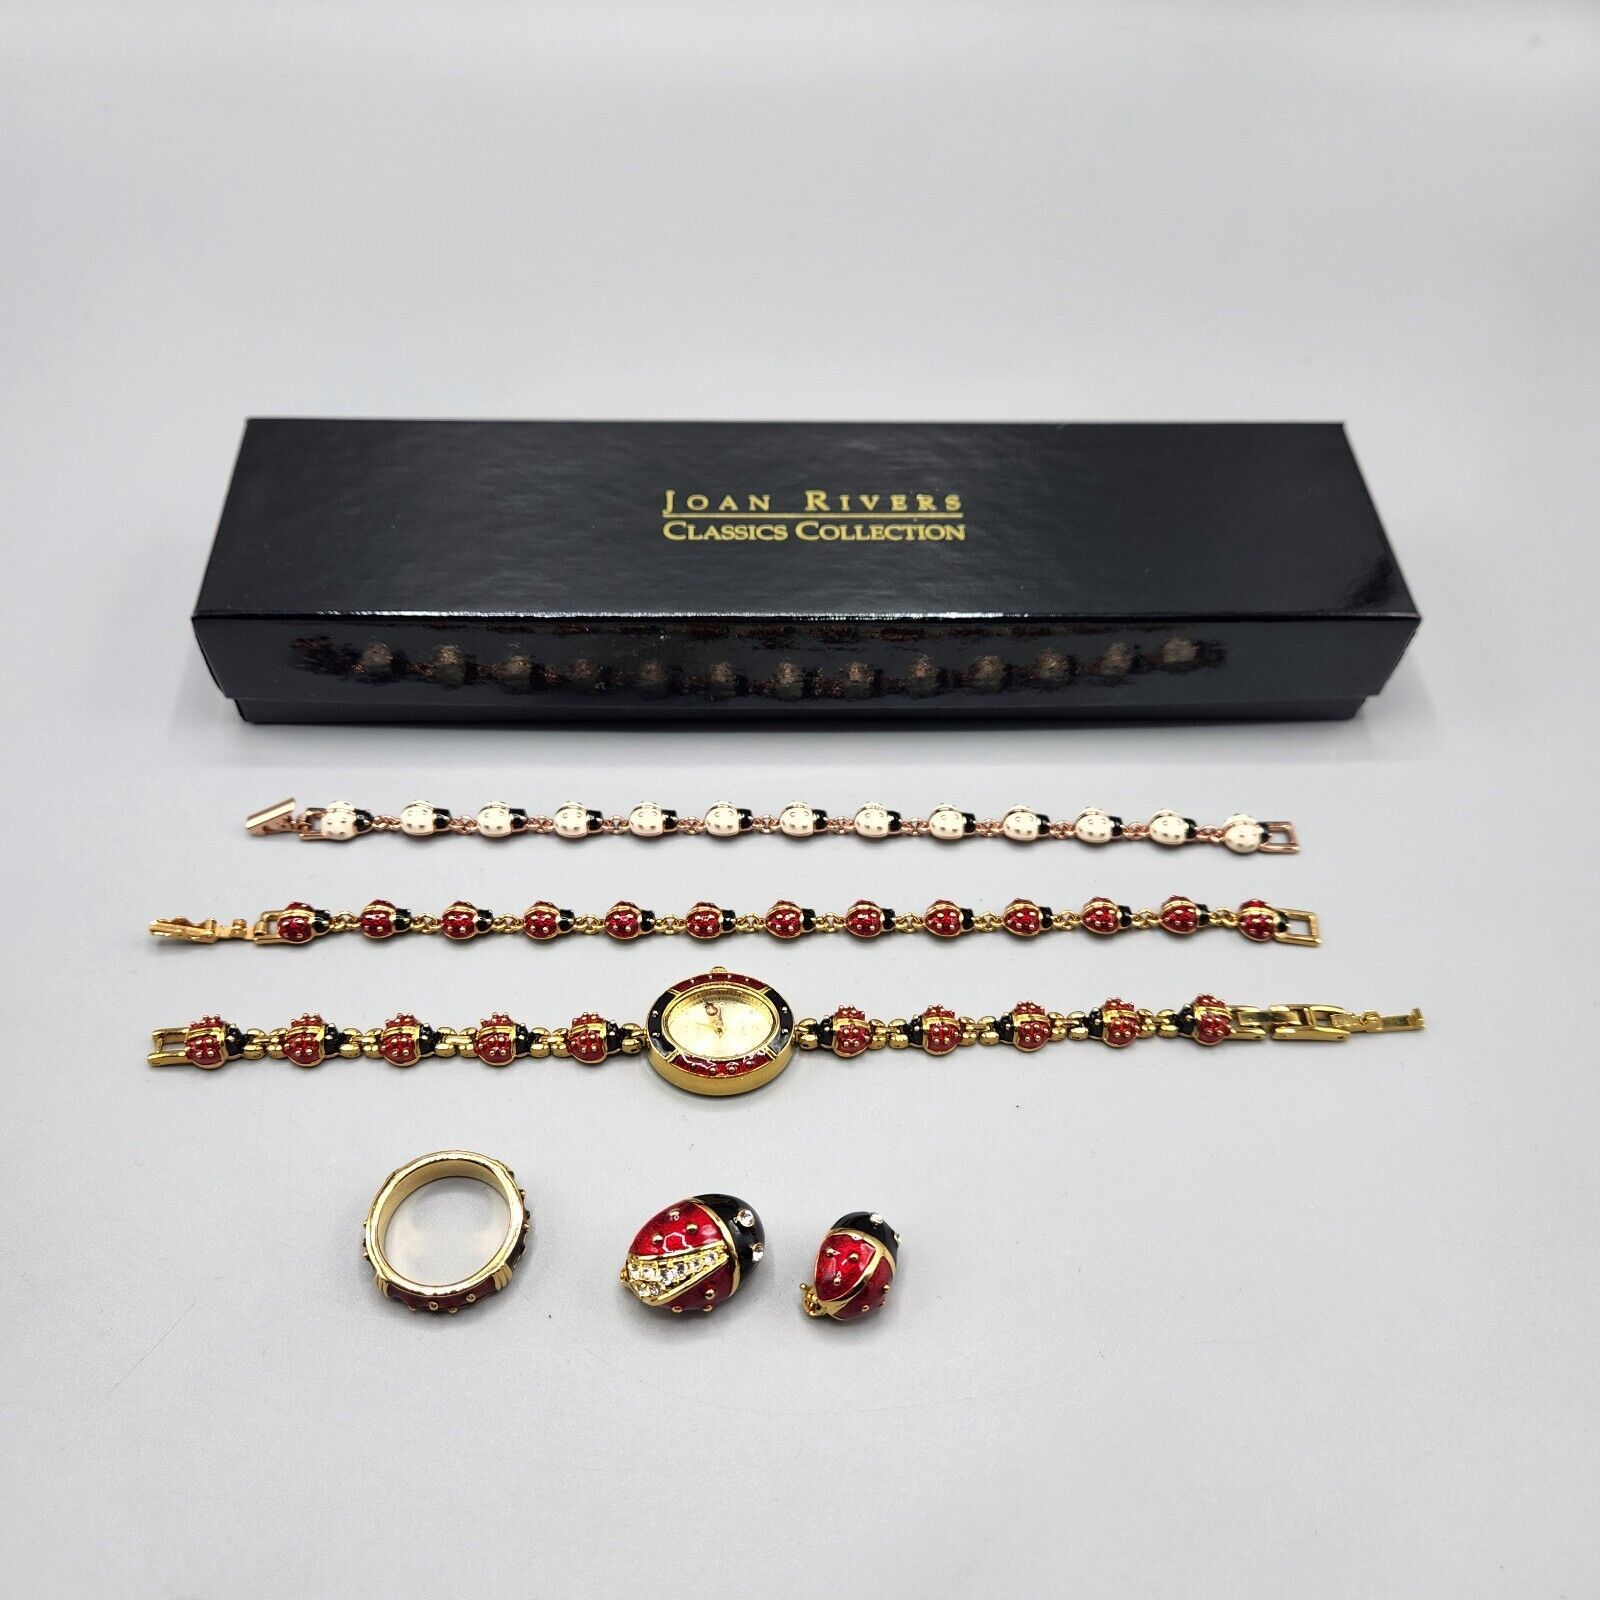 Joan Rivers Ladybug Watch Bracelet Ring Size 9 & Pin Set Red Black White - $290.24